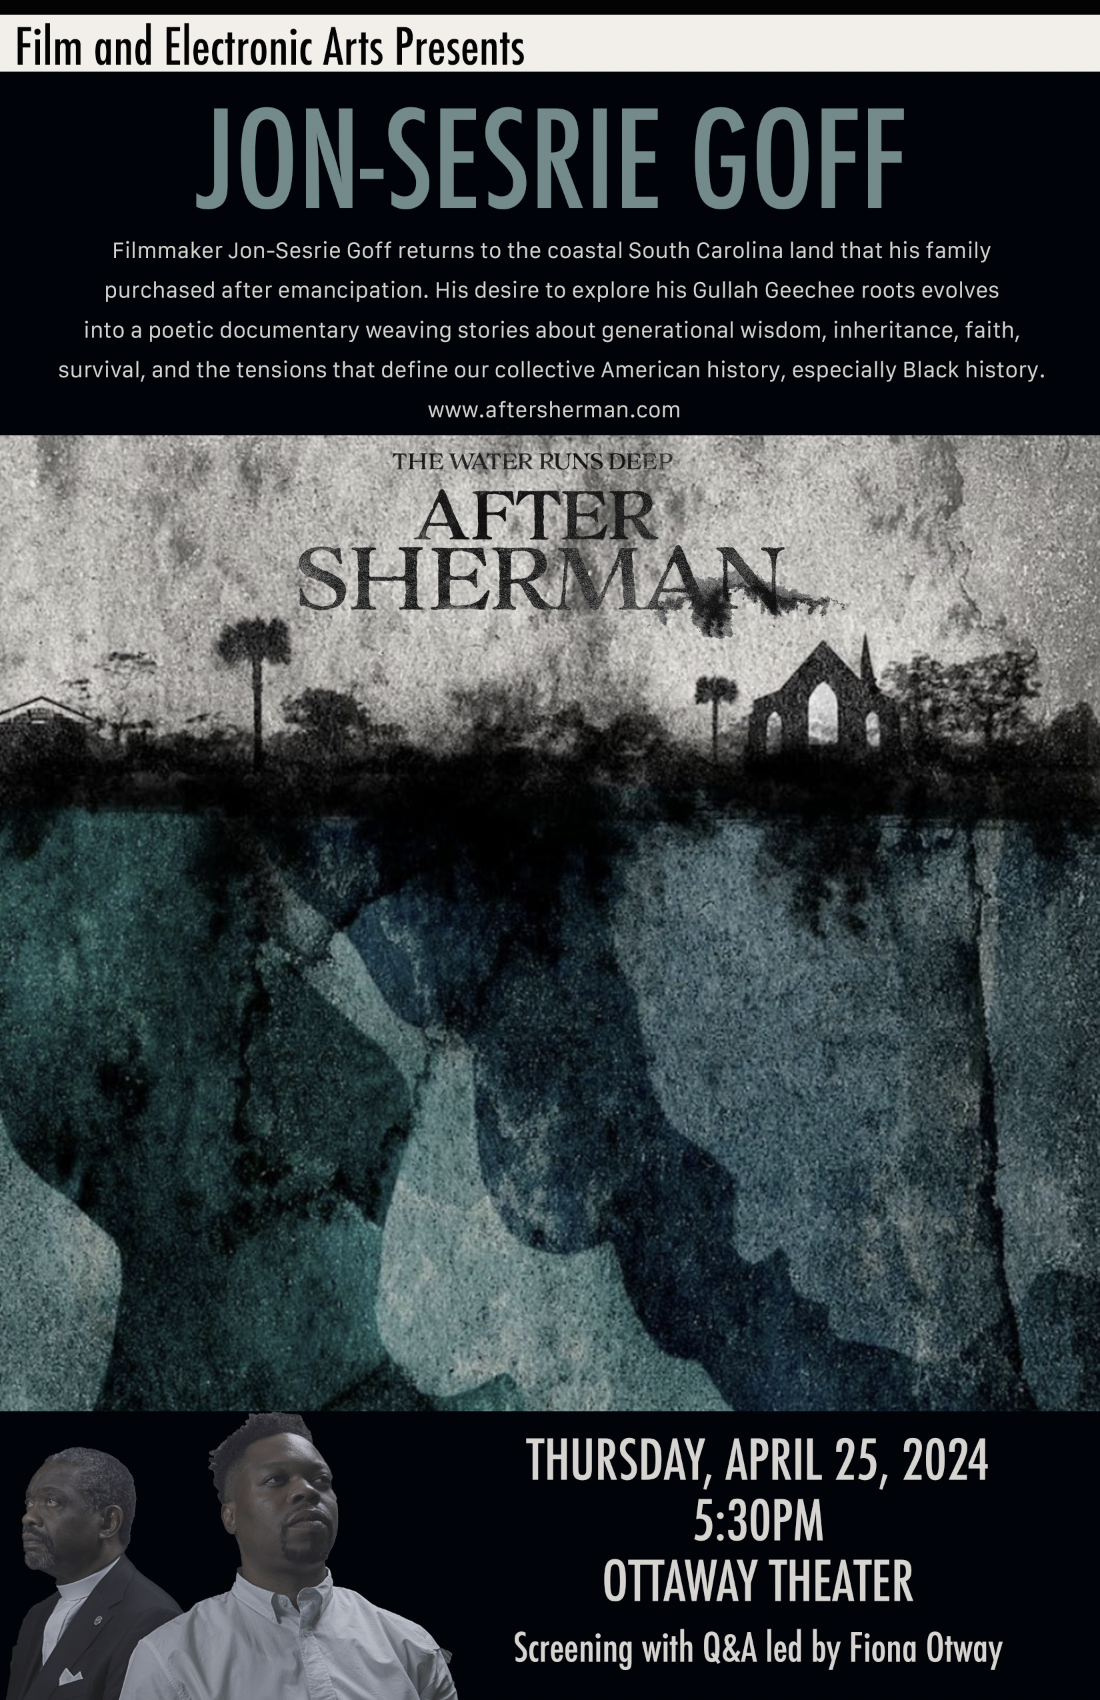 Filmmaker Jon-Sesrie Goff - Screening of After Sherman followed by Q&amp;A